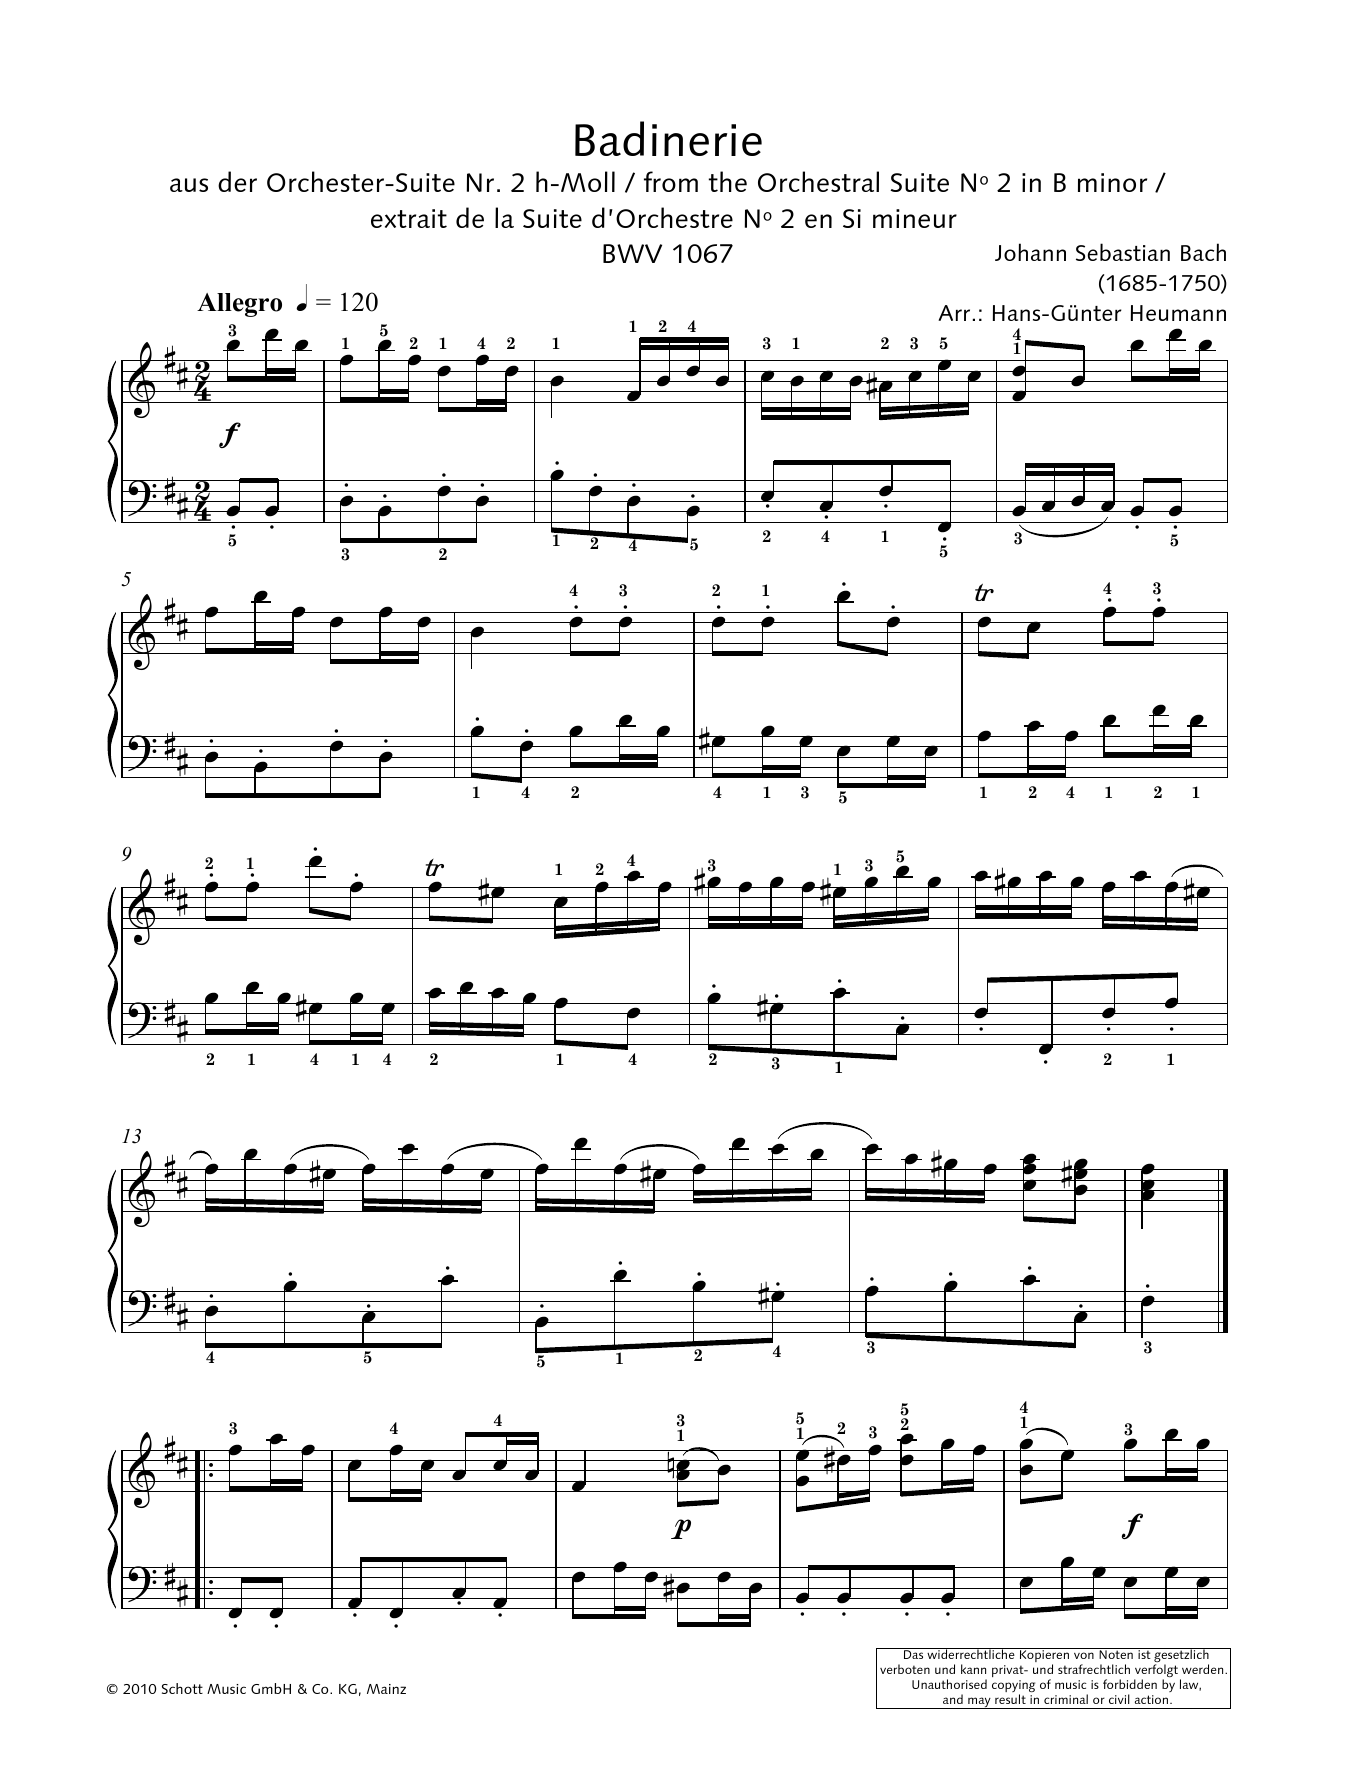 Download Johann Sebastian Bach Badinerie Sheet Music